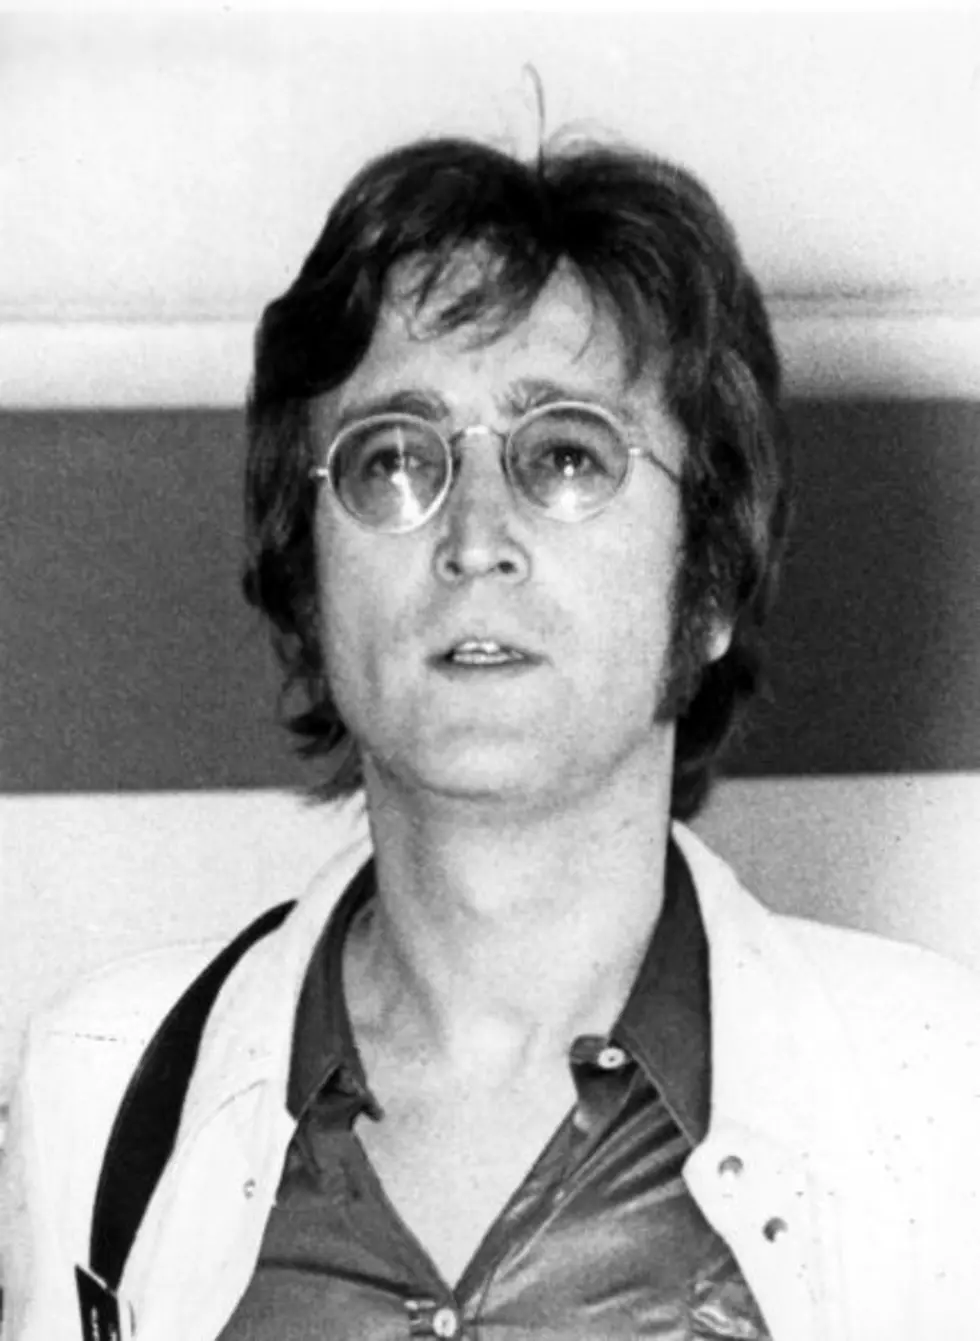 Auction Of Rare John Lennon Items